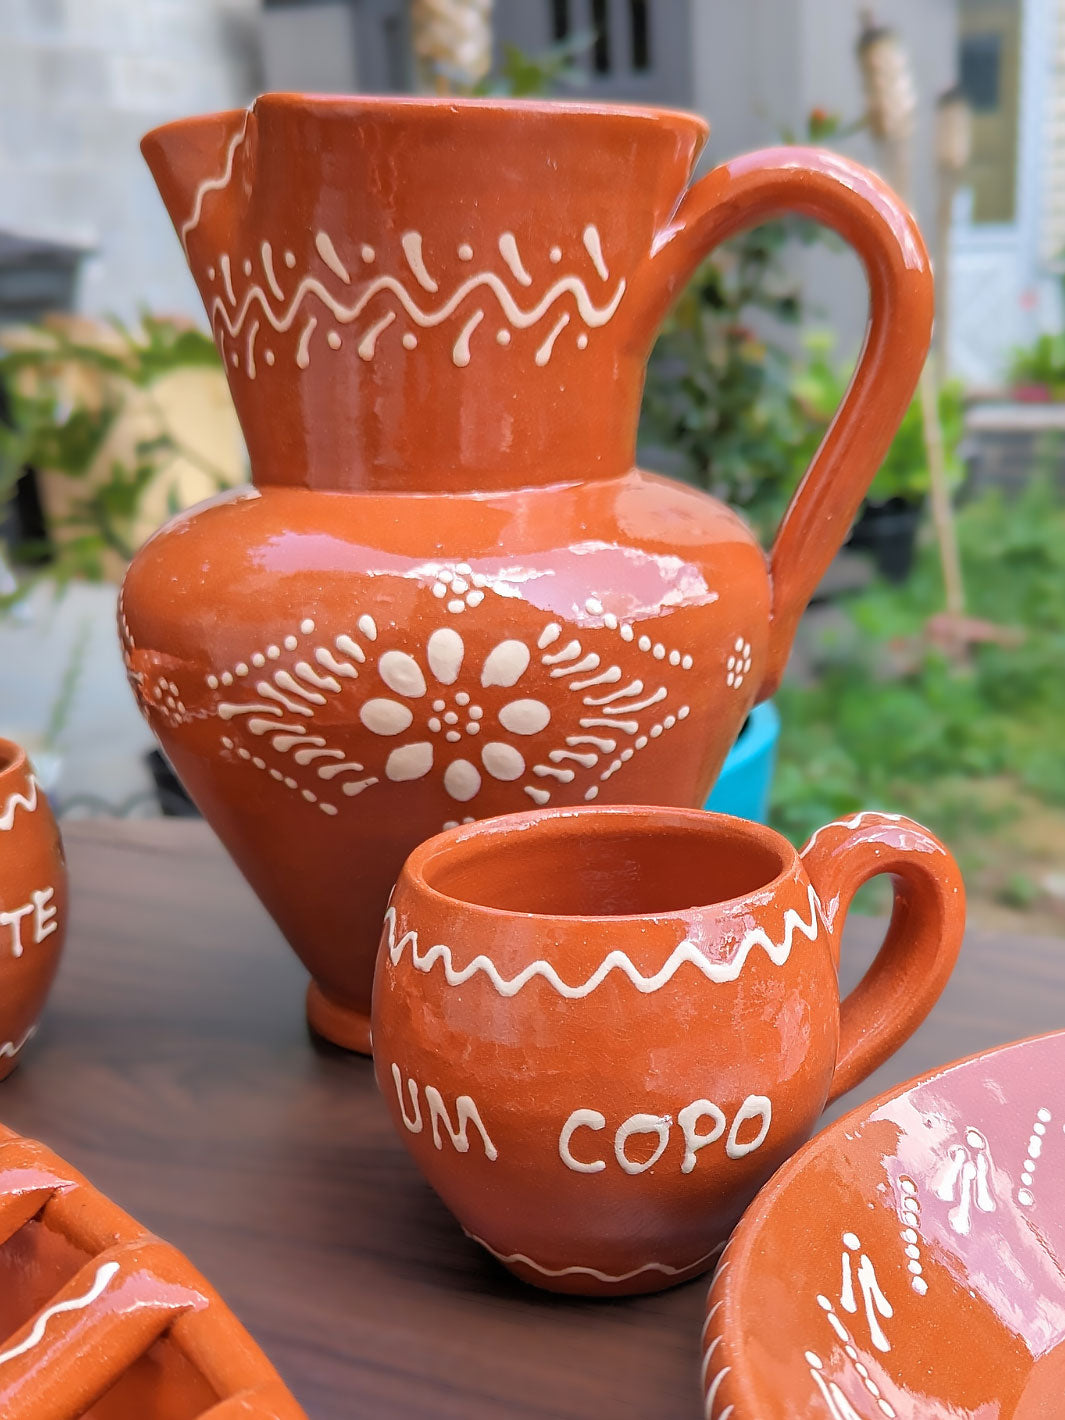 Portuguese Pottery Terracotta Glazed Clay Wine Mugs - Set of 4